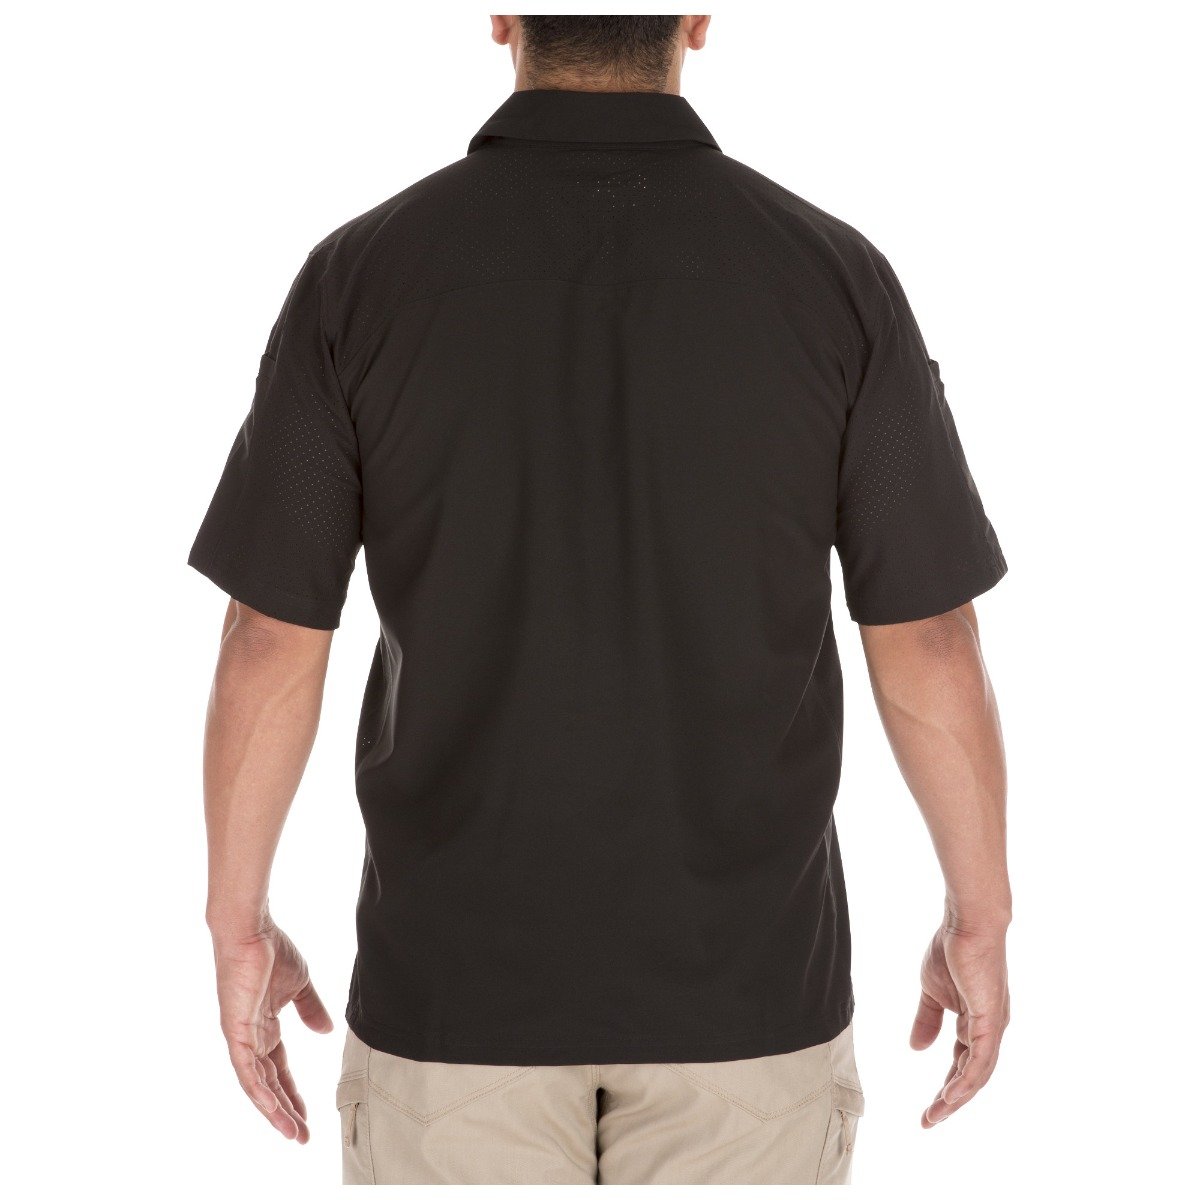 5.11 Tactical Freedom Flex Woven Short Sleeve Shirt Black Shirts 5.11 Tactical Small Tactical Gear Supplier Tactical Distributors Australia